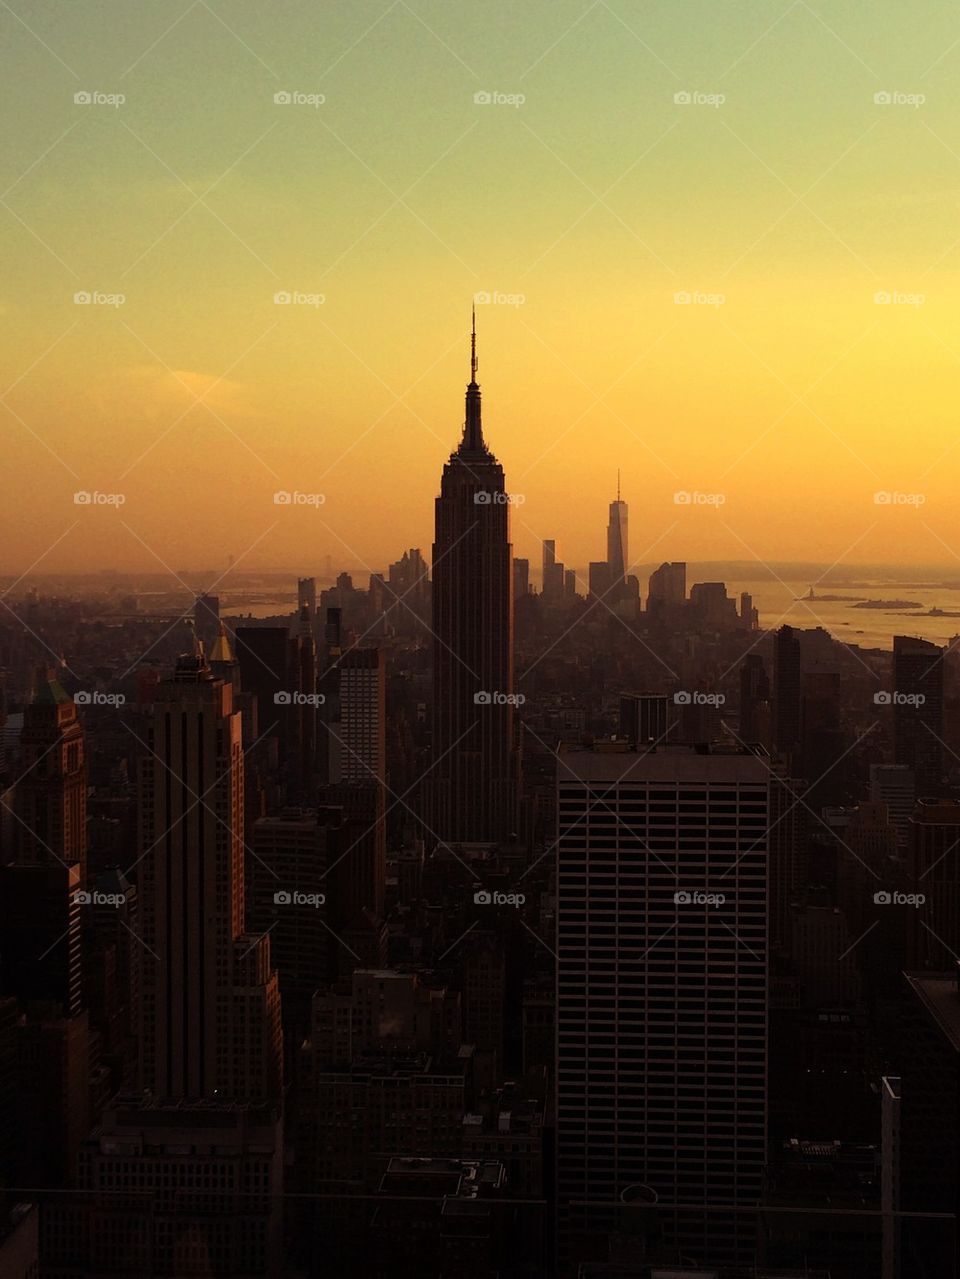 New York city at twilight